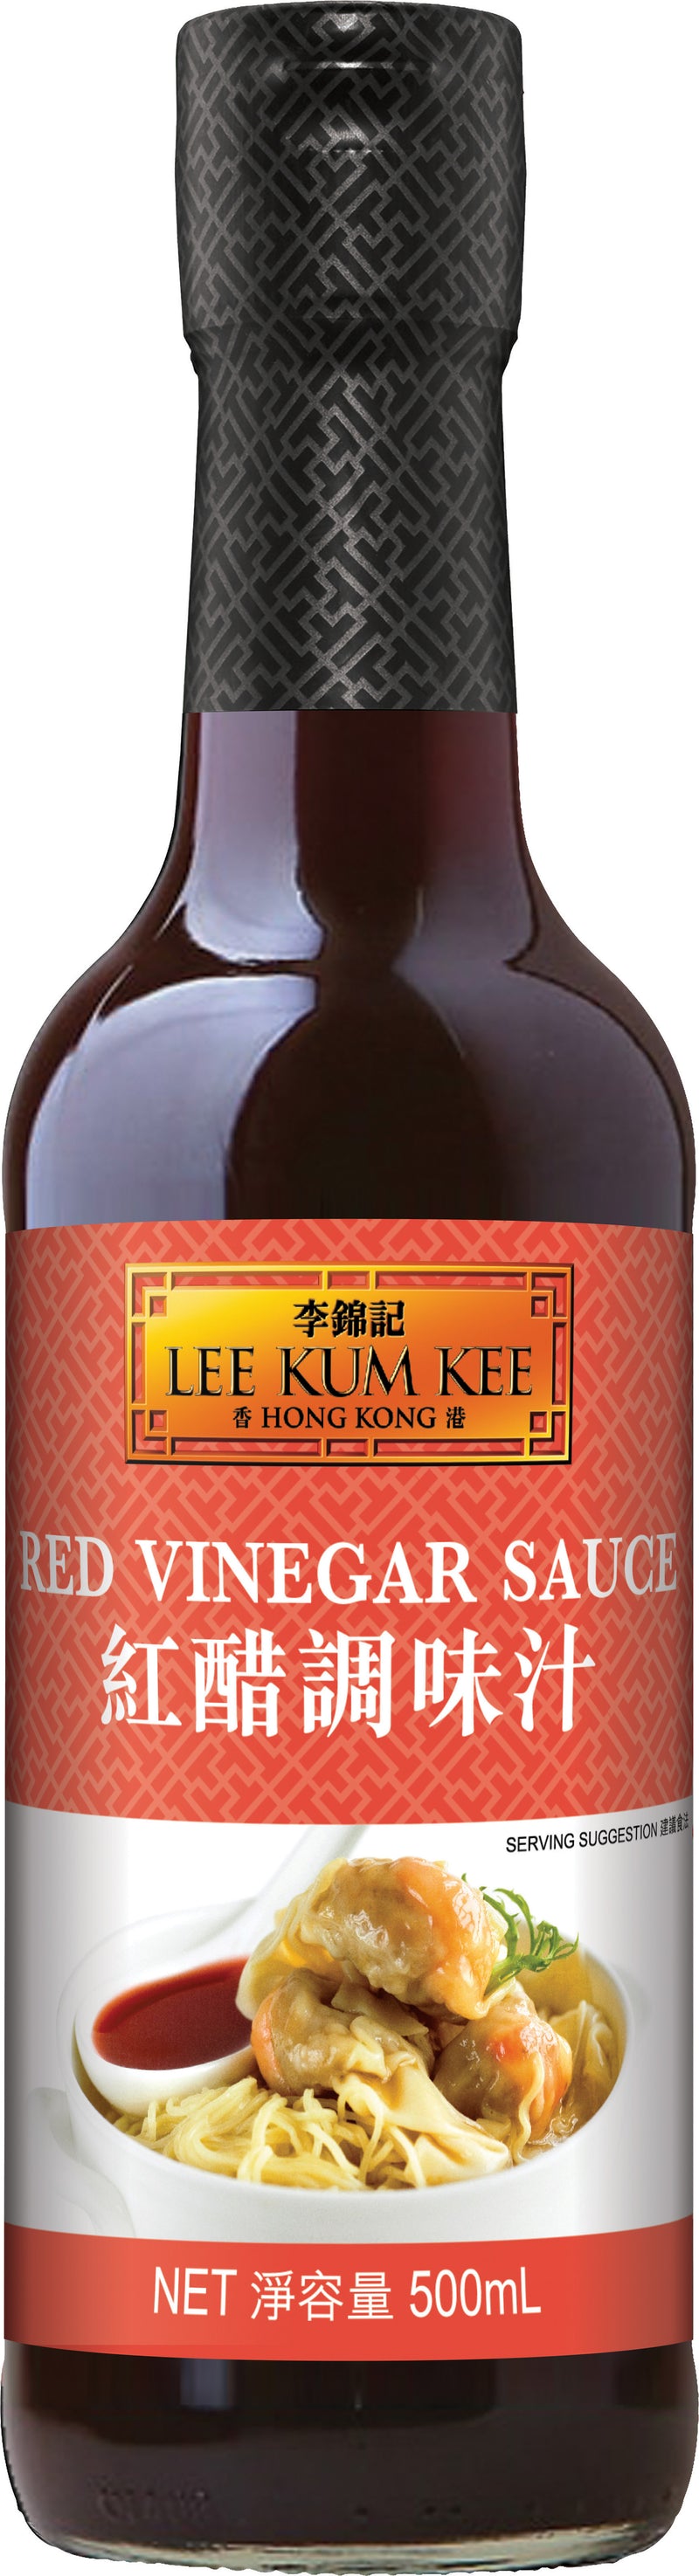 Red Vinegar Sauce 500ml Lee Kum Kee (D)